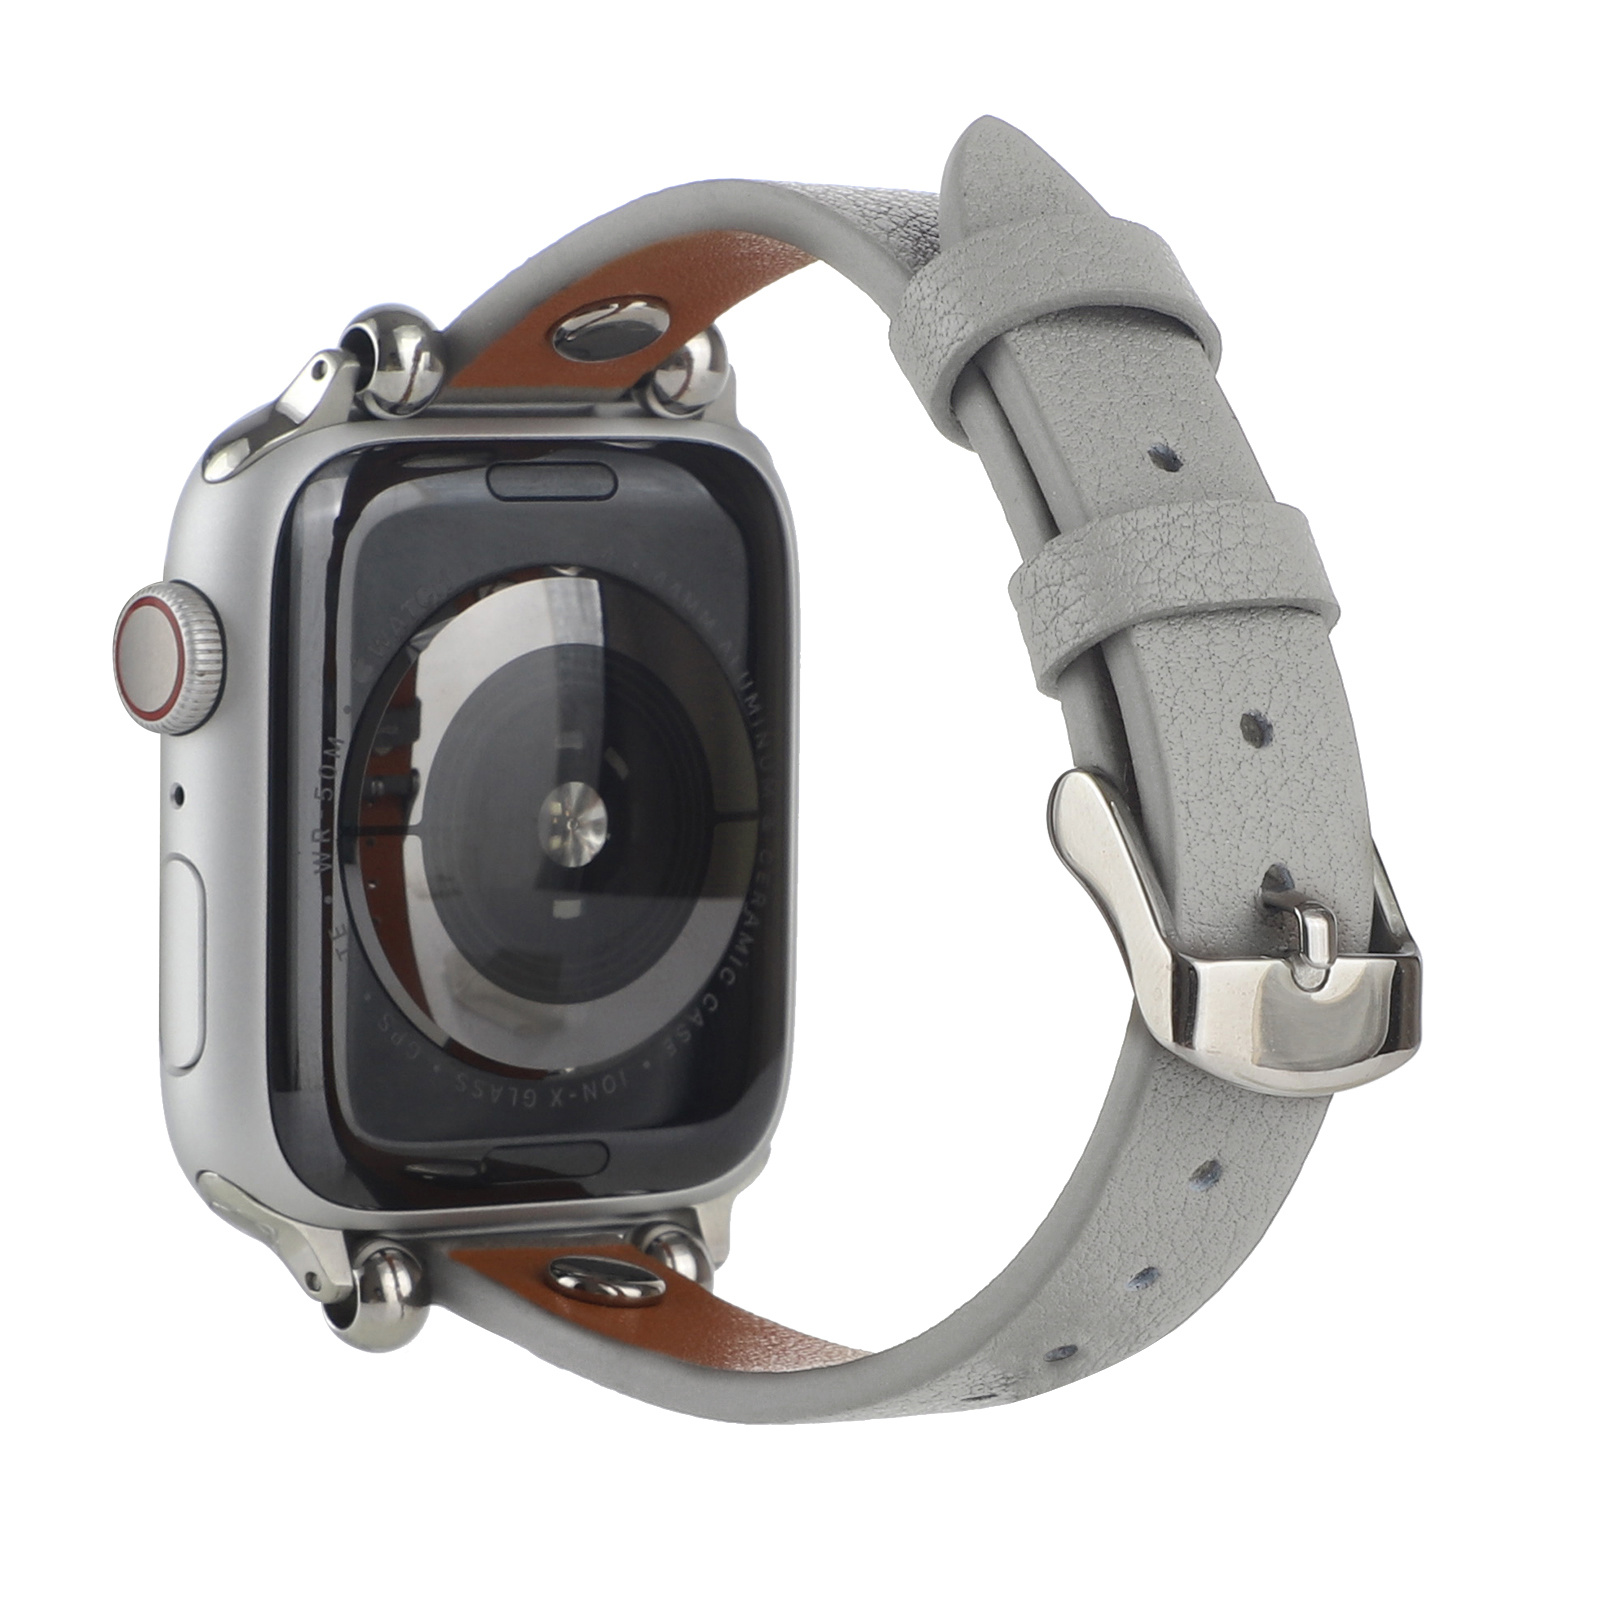 Cinturino smart in pelle per Apple Watch - grigio